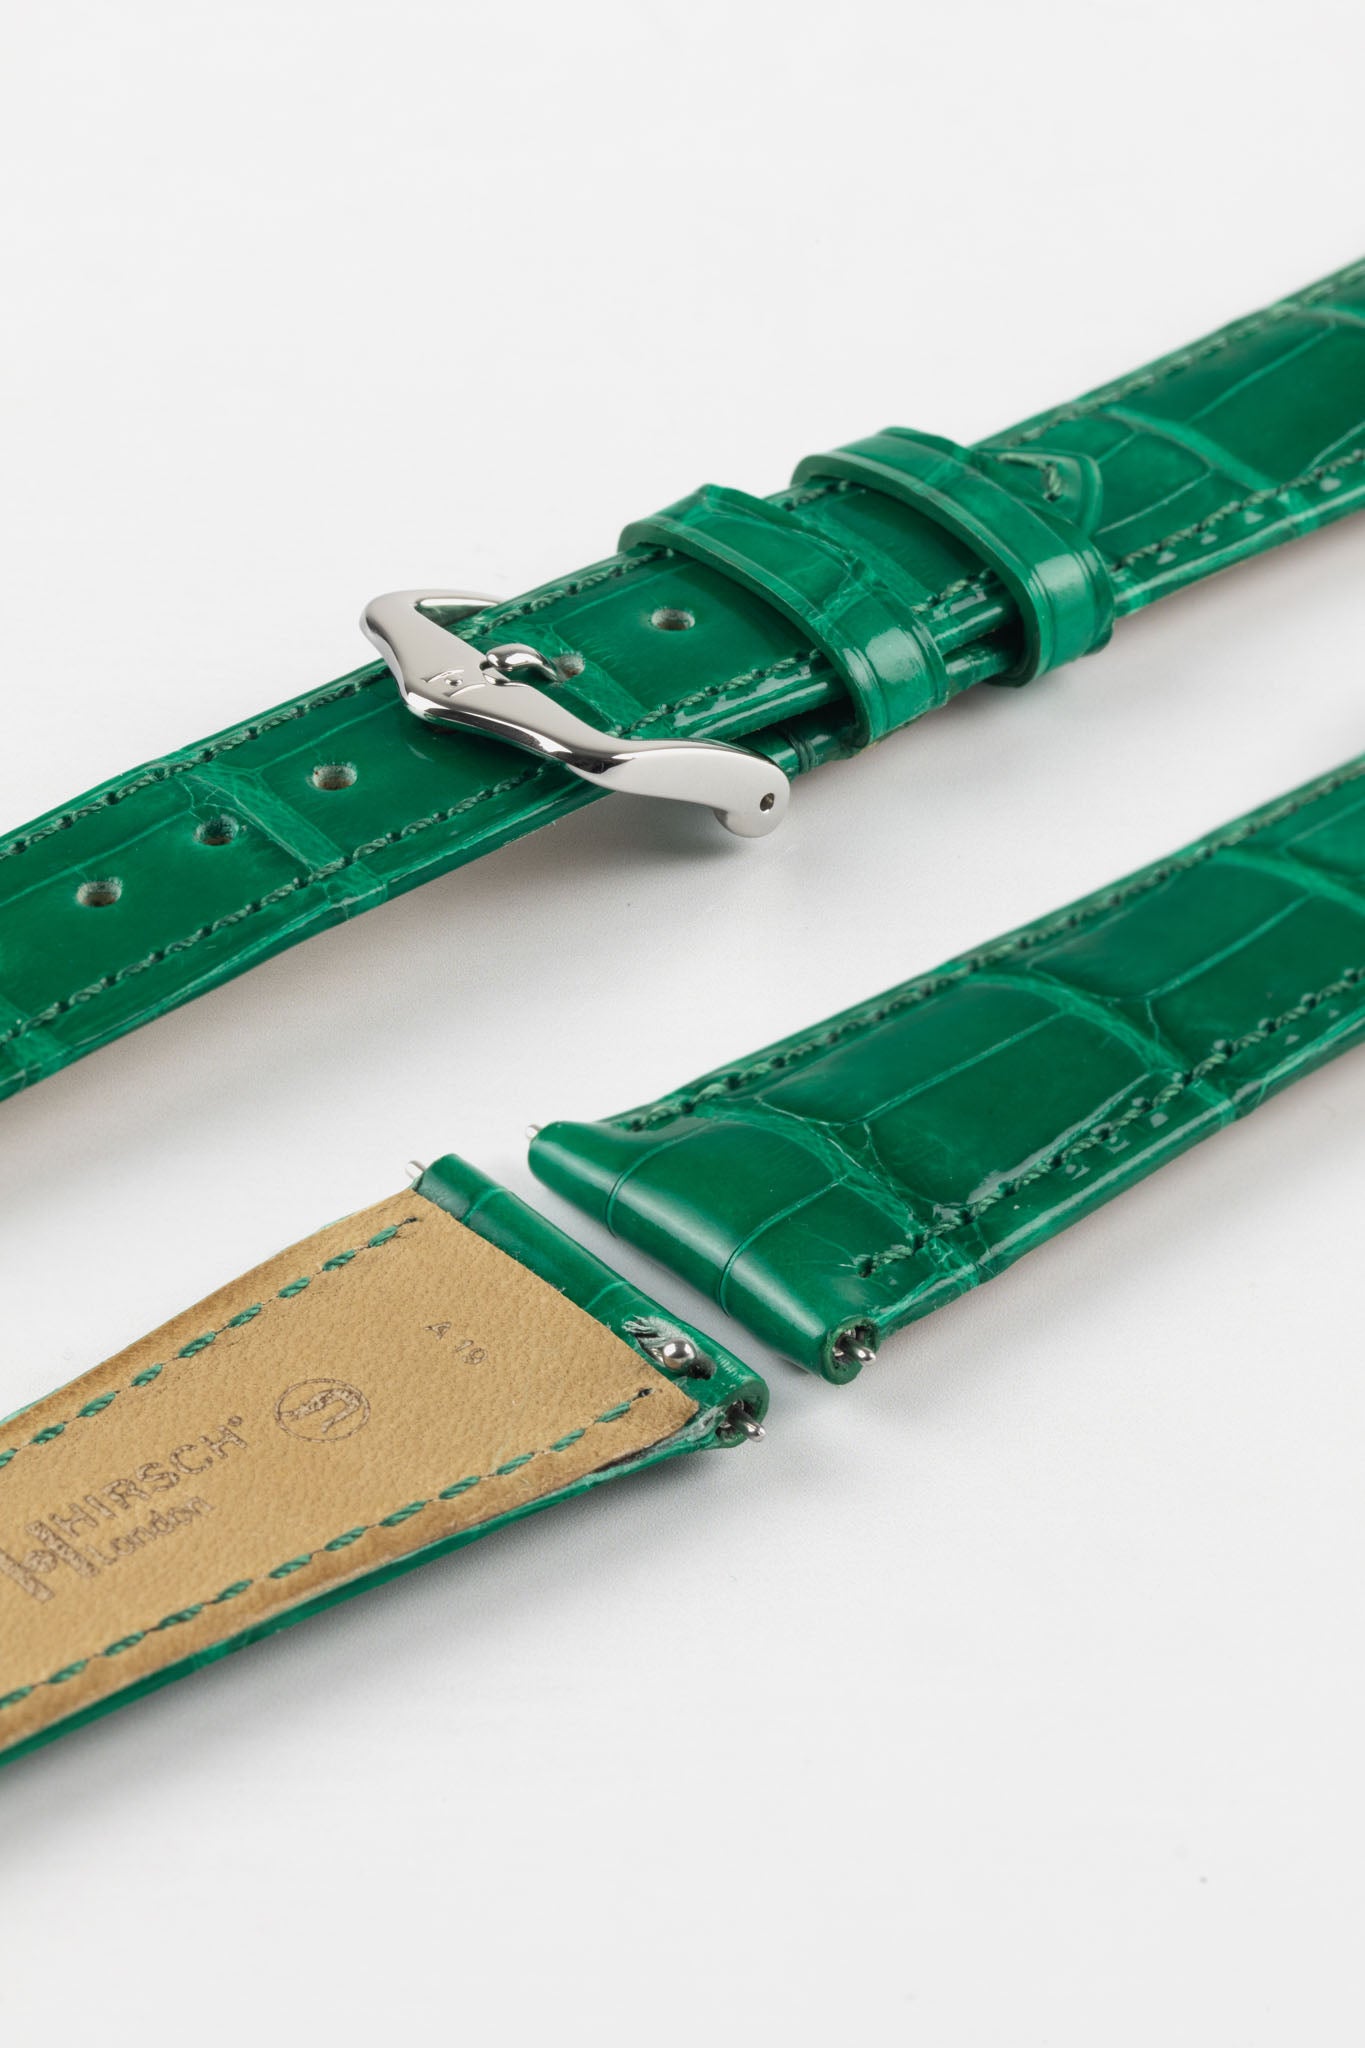 Hirsch LONDON Shiny Alligator Leather Watch Strap in GREEN